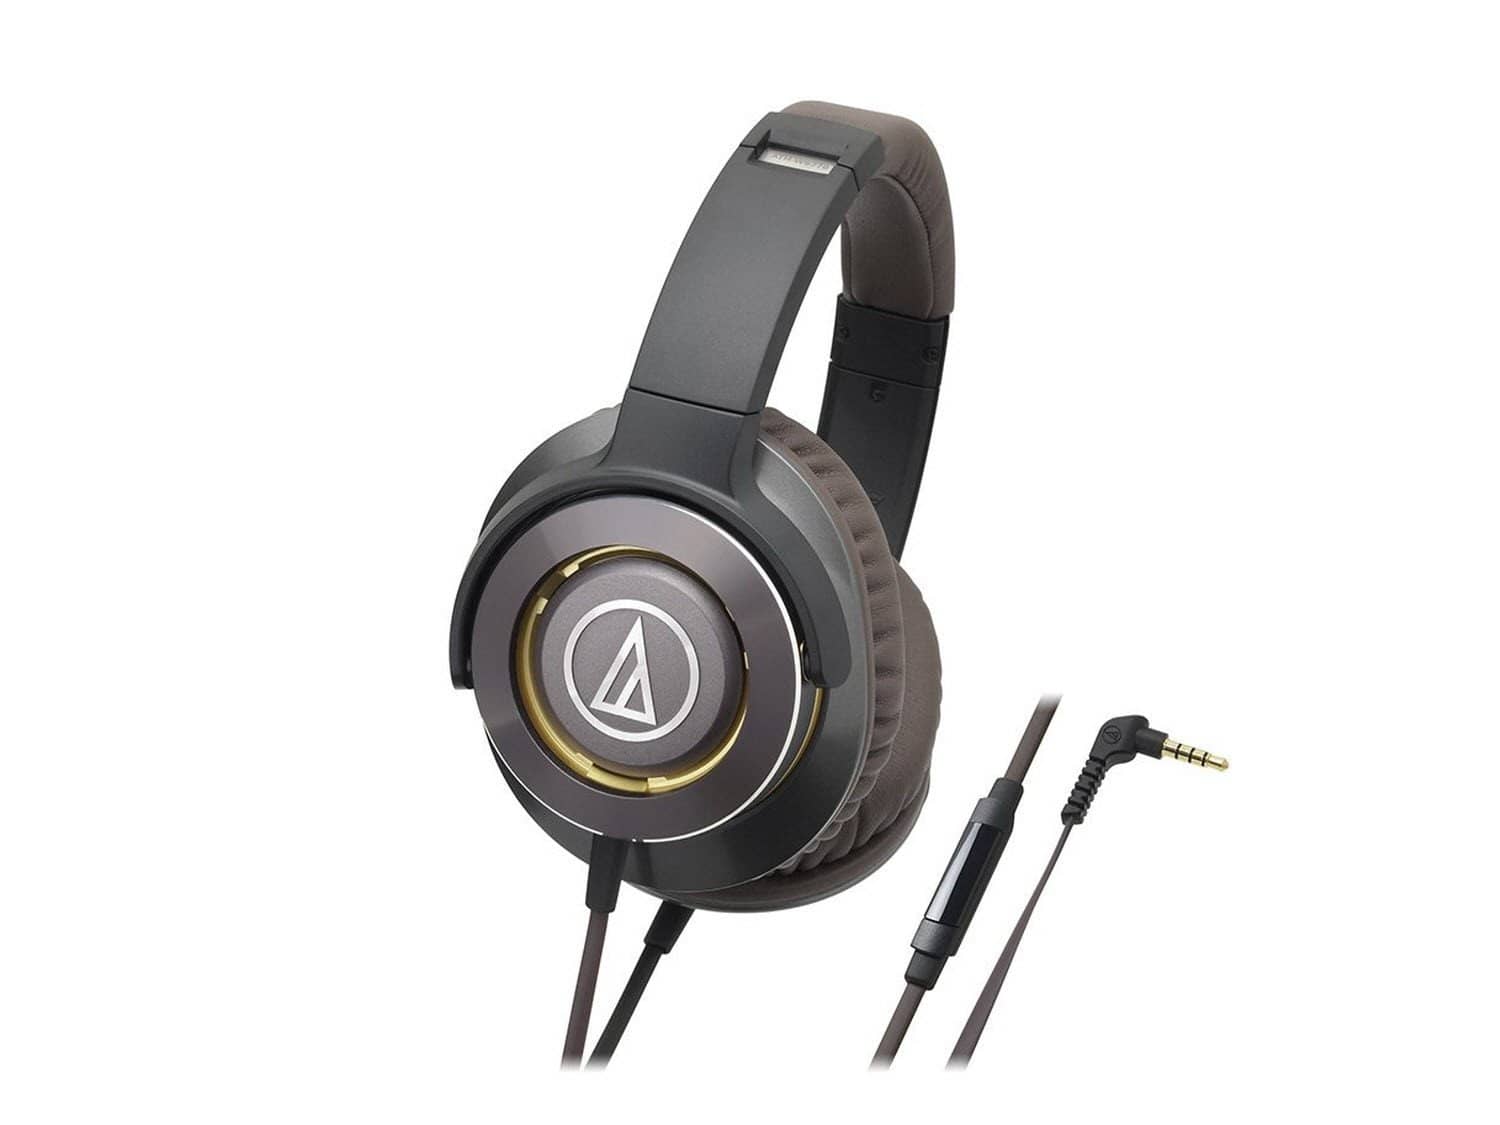 Audio-Technica ATH-WS770iSGM Solid Bass Over-Ear Headphones - Gun Metal